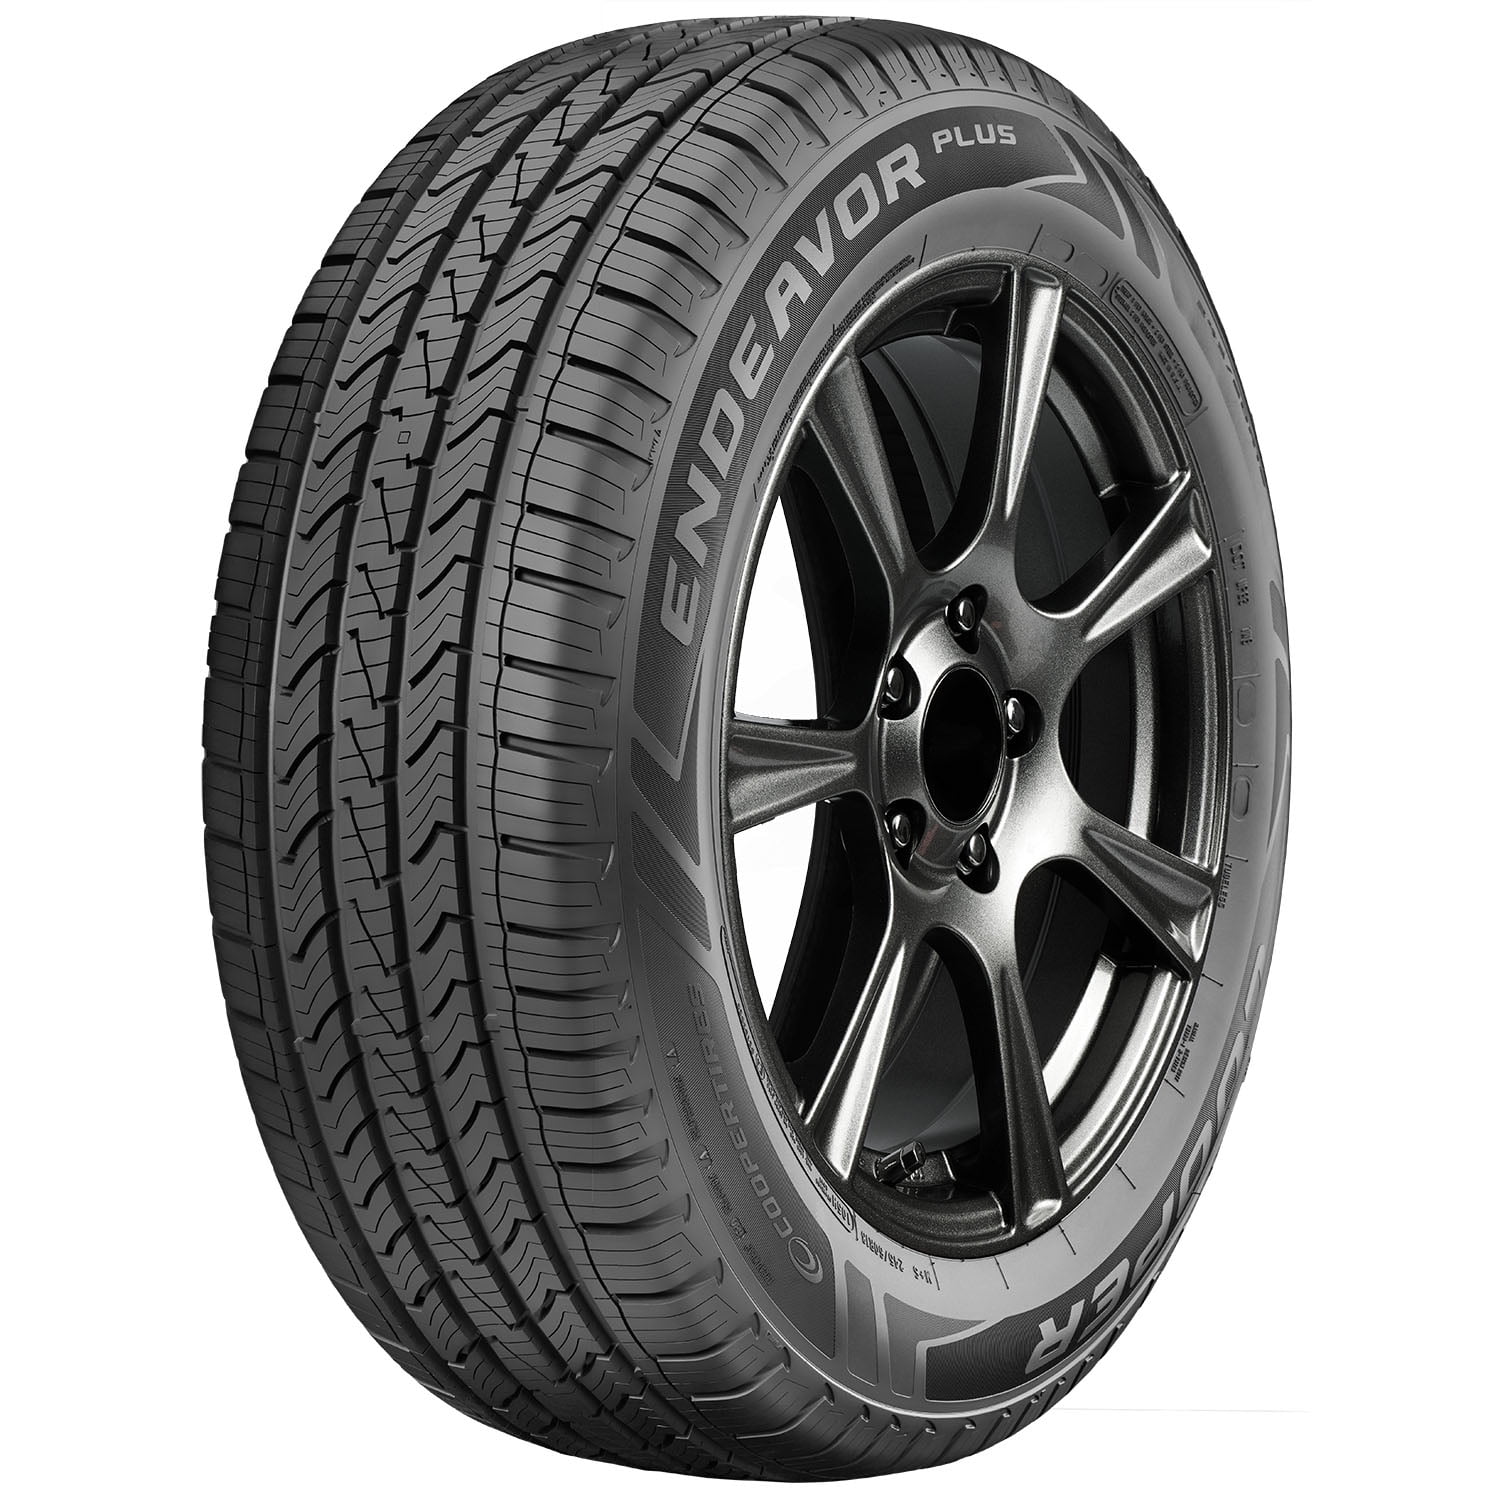 Cooper Endeavor Plus All-Season 205/70R16 97T Tire 